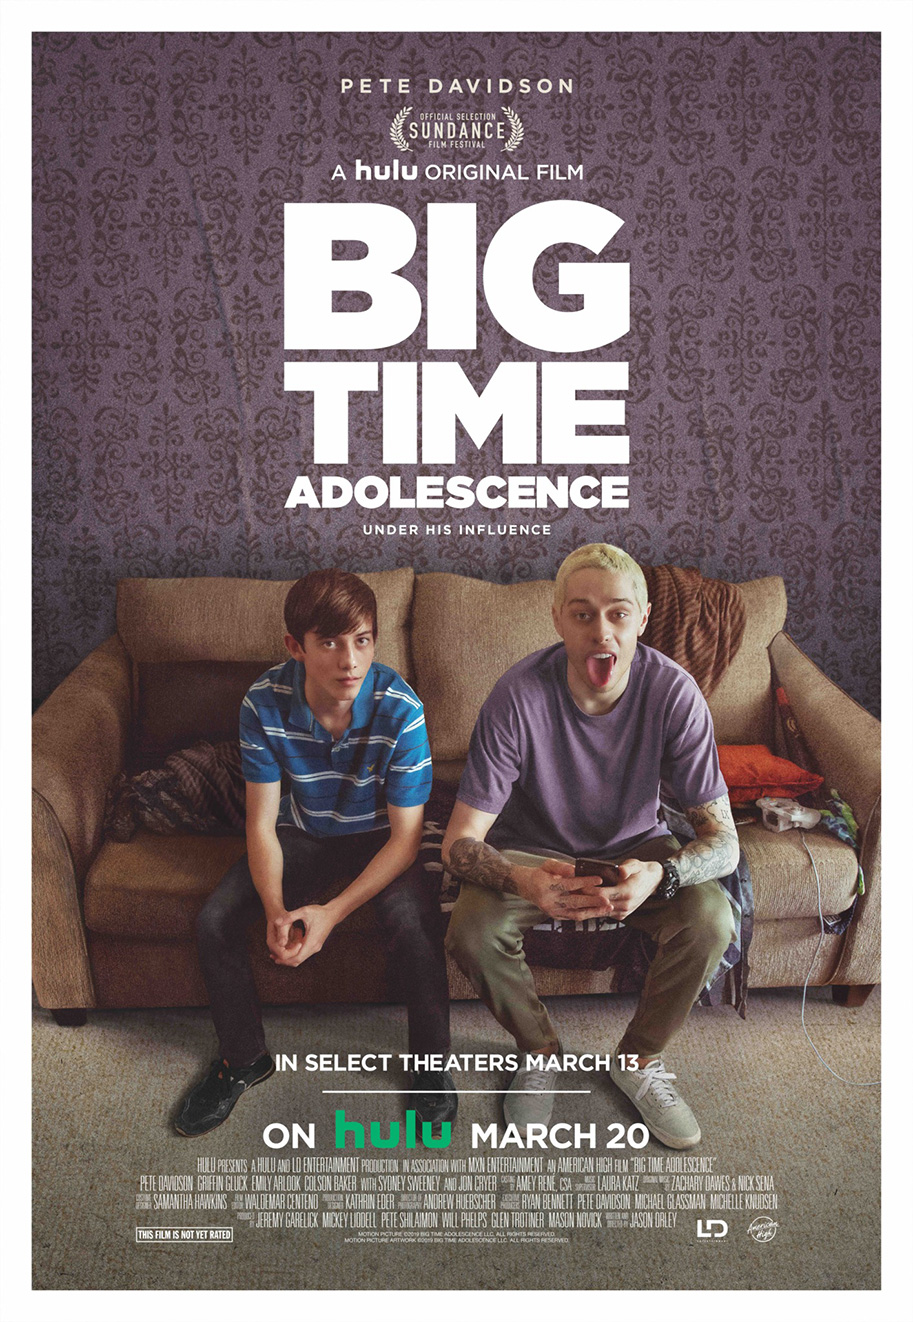 Big Time Adolescence, Pete Davidson, Hulu